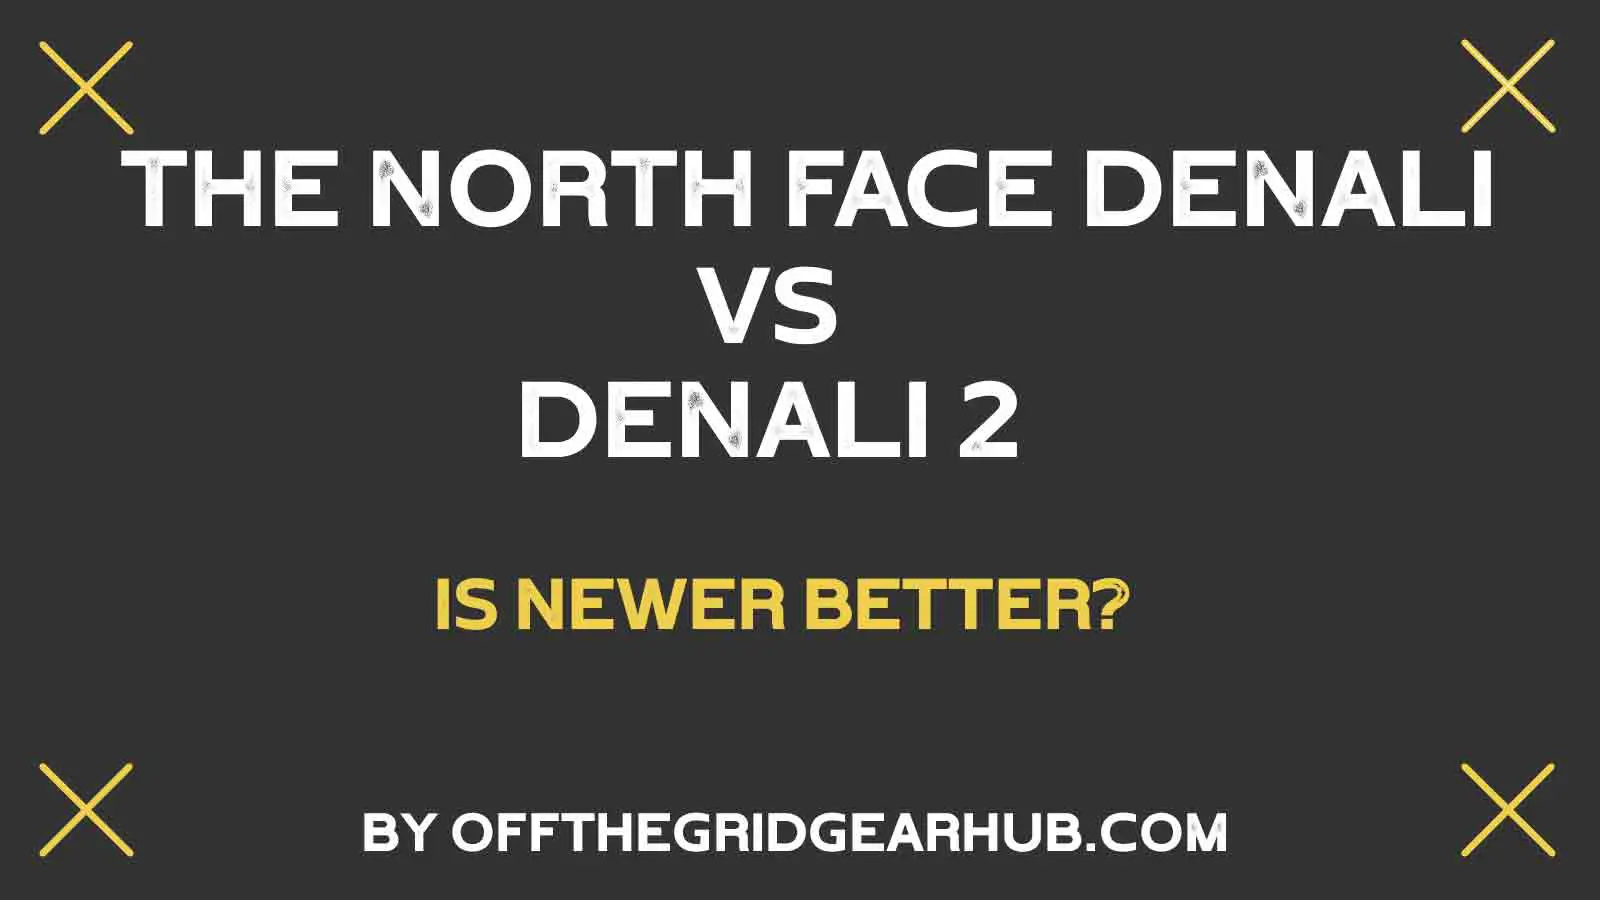 The North Face Denali vs Denali 2